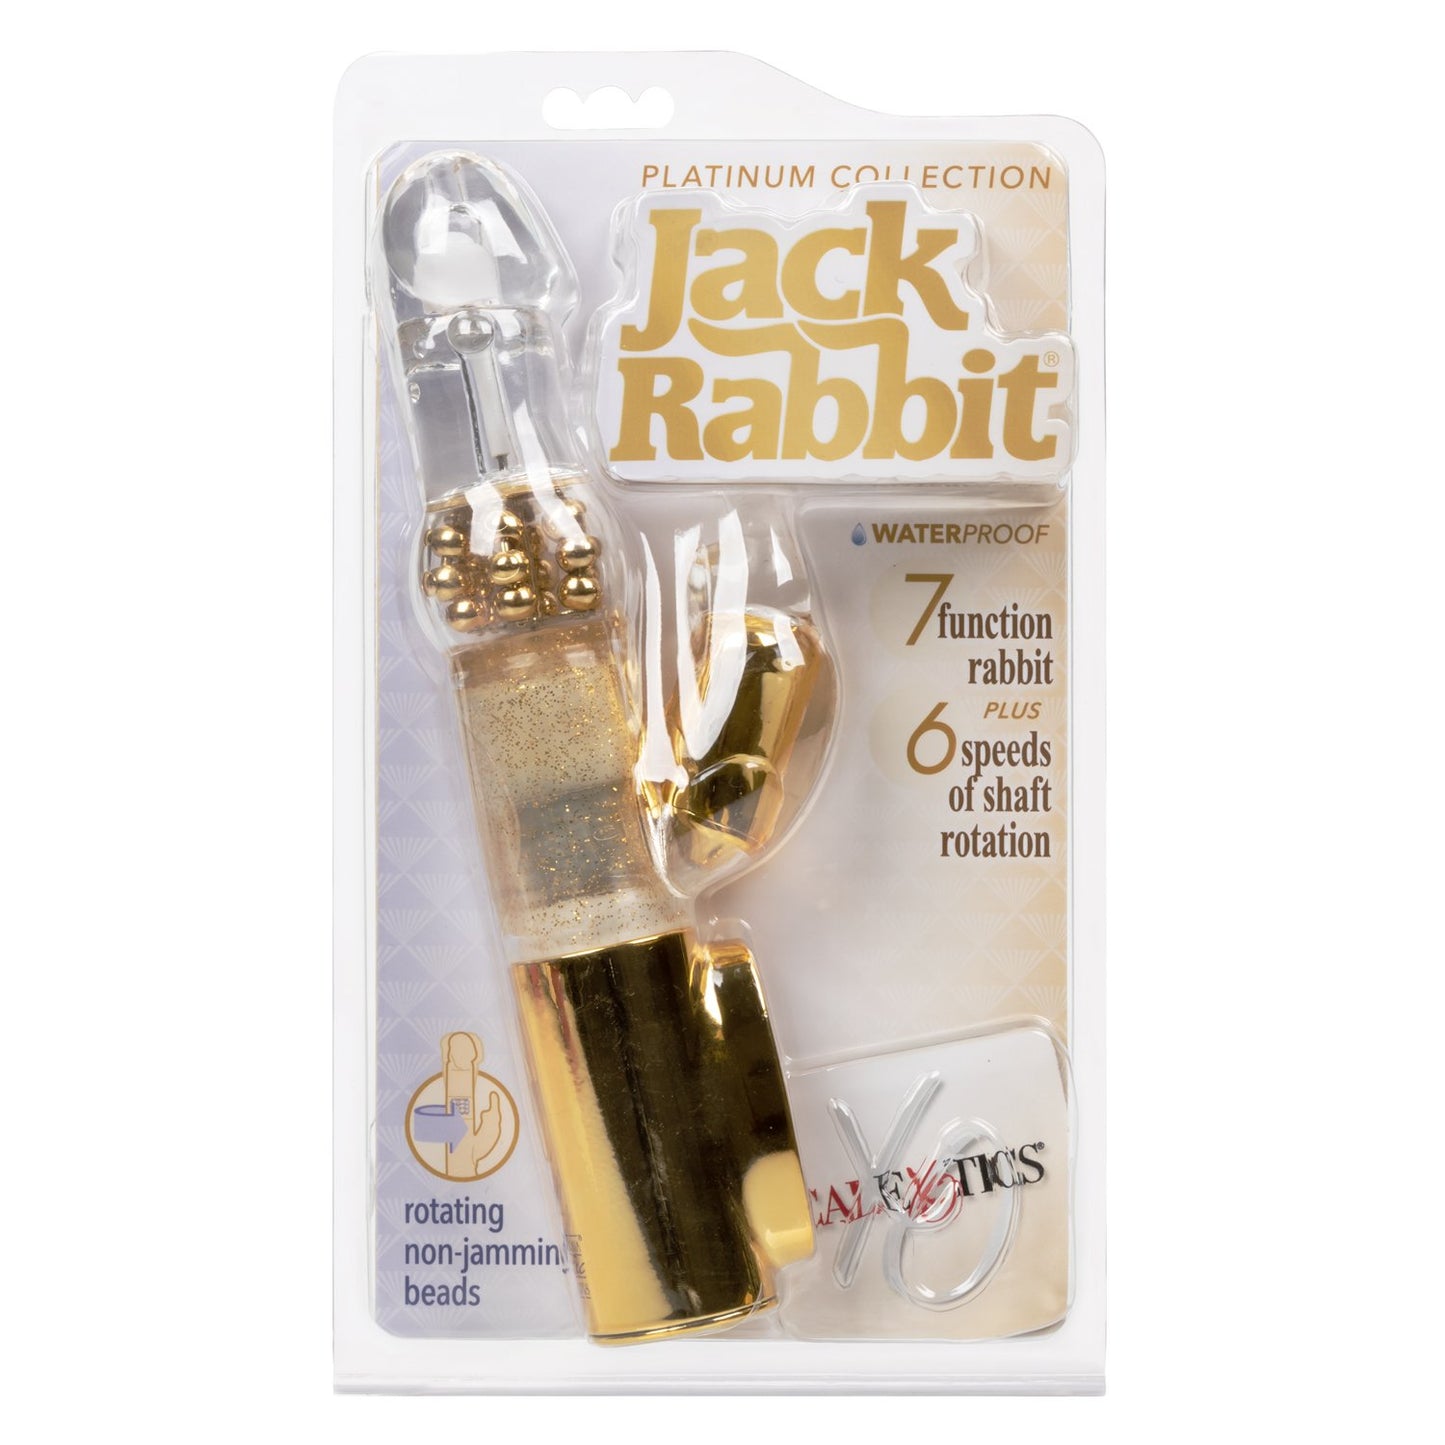 Jack Rabbit Platinum Collection Jack Rabbit